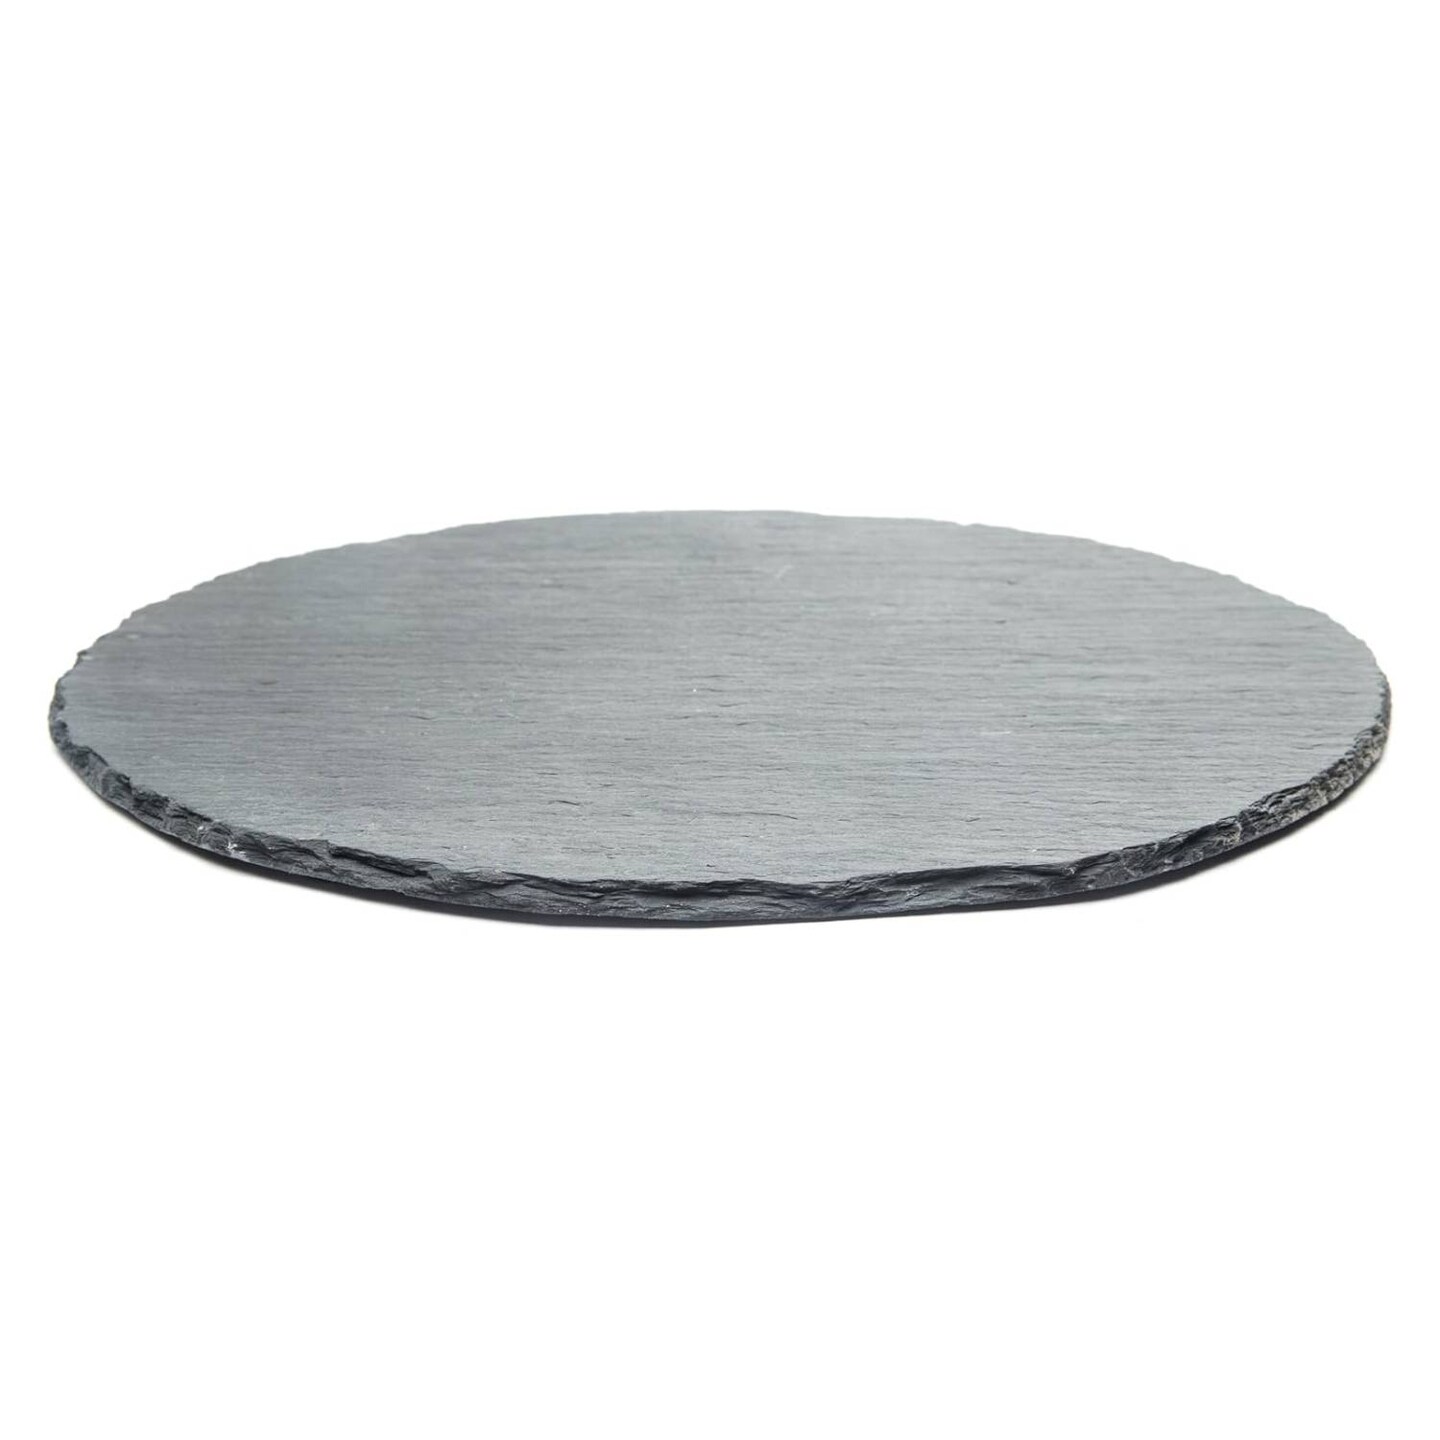 Fox Run 3808 Slate Cheese Board, Round Gray, 12 x 12 x 0.25 inches